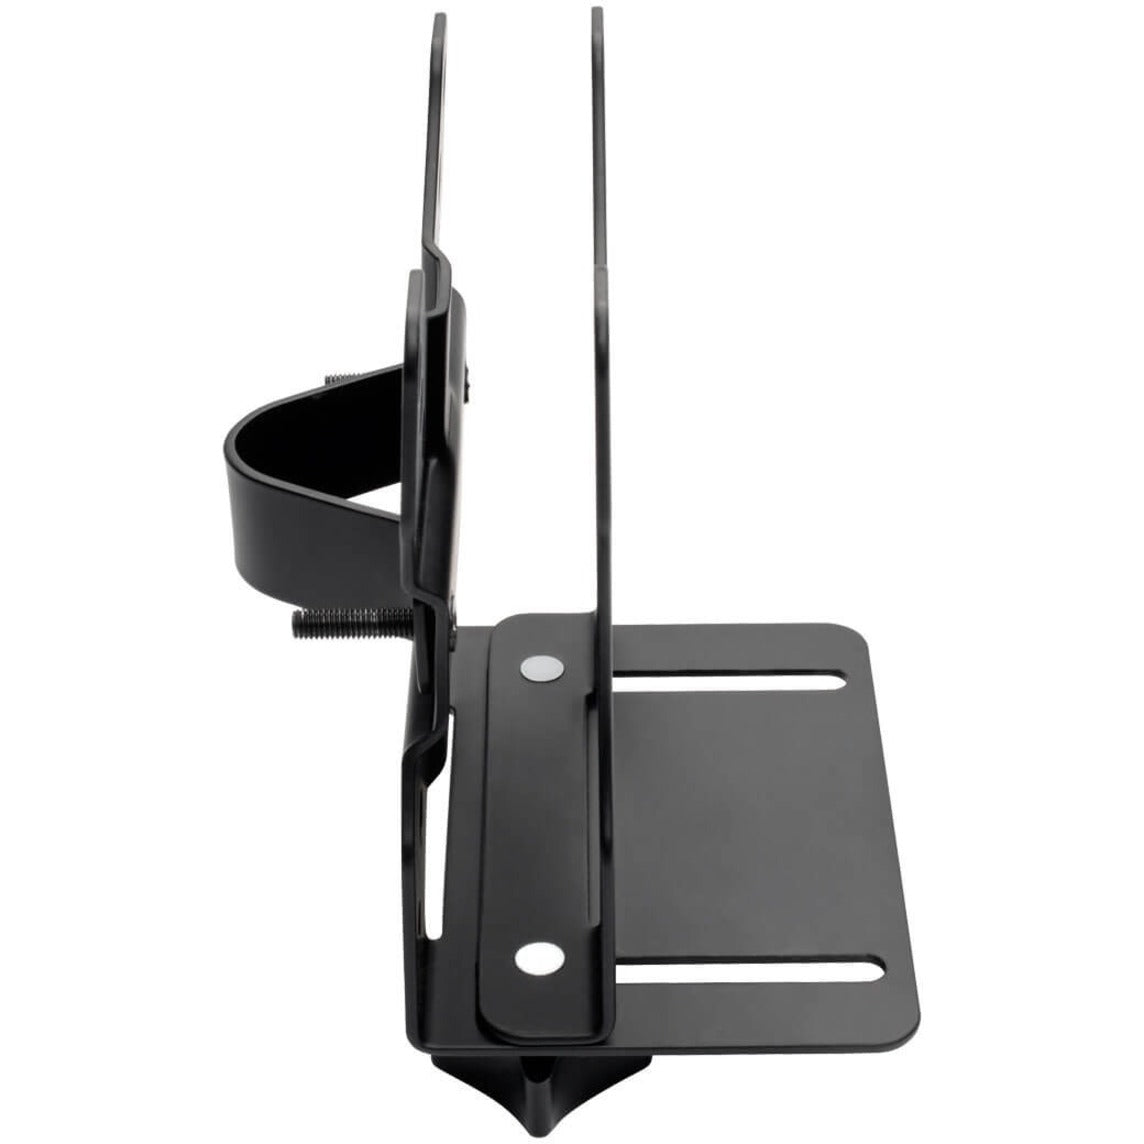 Tripp Lite DMATC Universal Thin Client Monitor Mount, Mounting Adapter Kit, 11.02 lb Maximum Load Capacity, Black Powder Coat